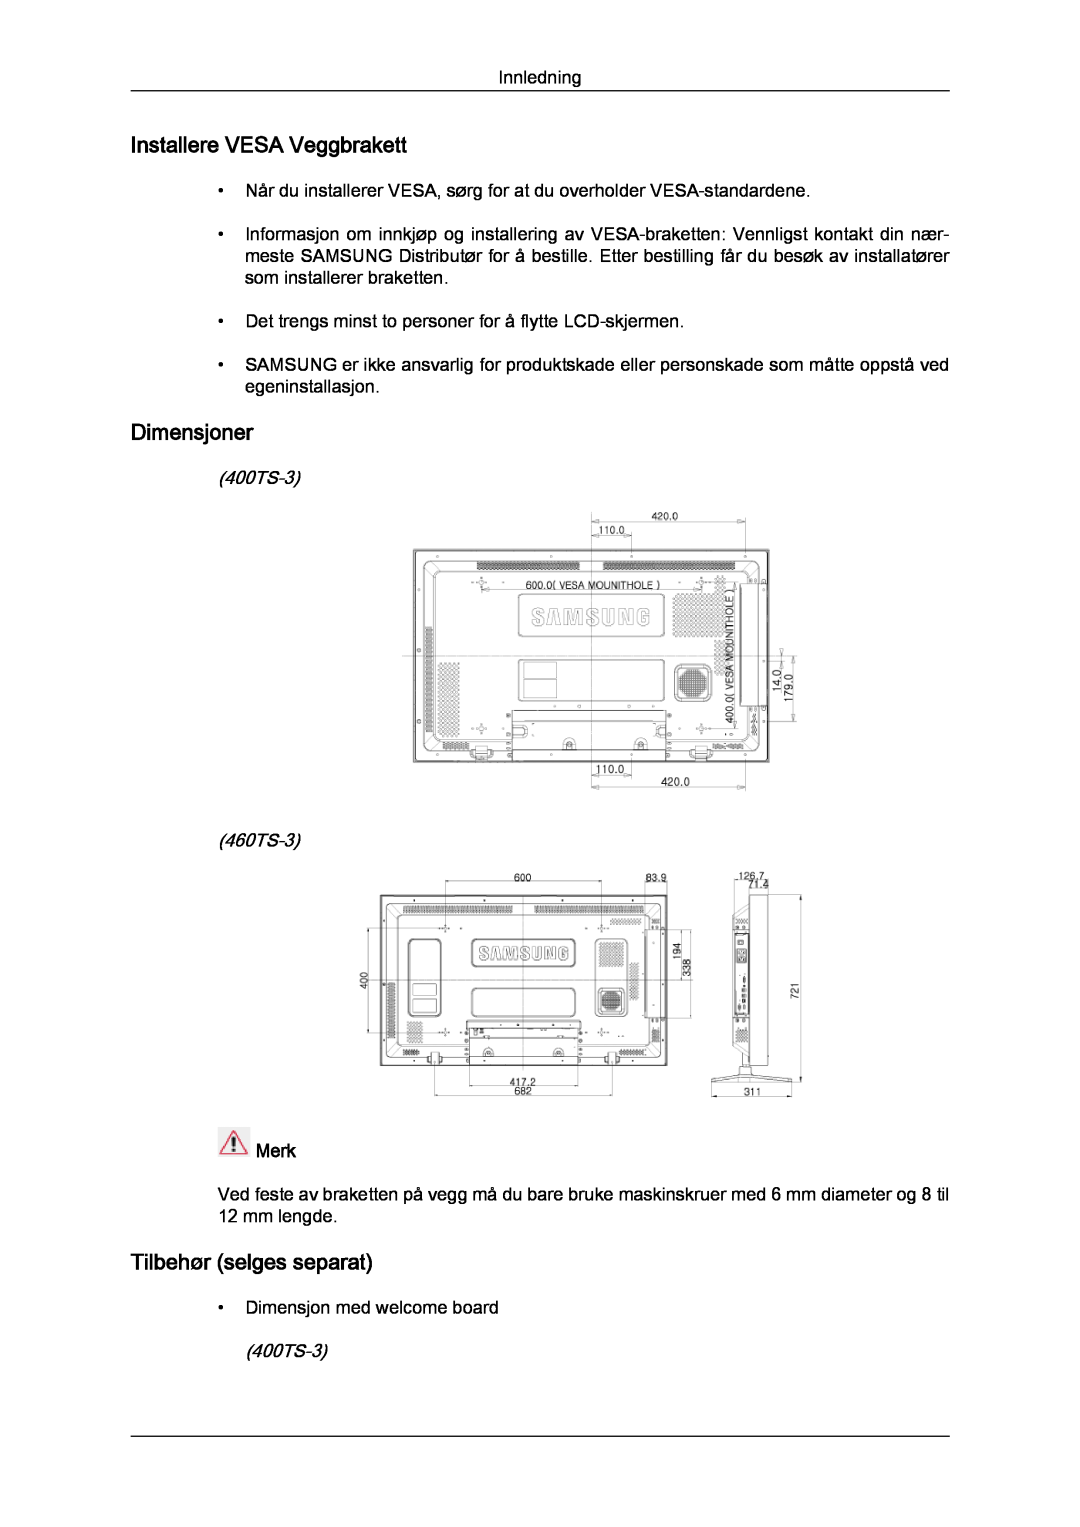 Samsung LH46CRPMBC/EN manual Installere VESA Veggbrakett, Dimensjoner, Tilbehør selges separat, 400TS-3 460TS-3, Merk 